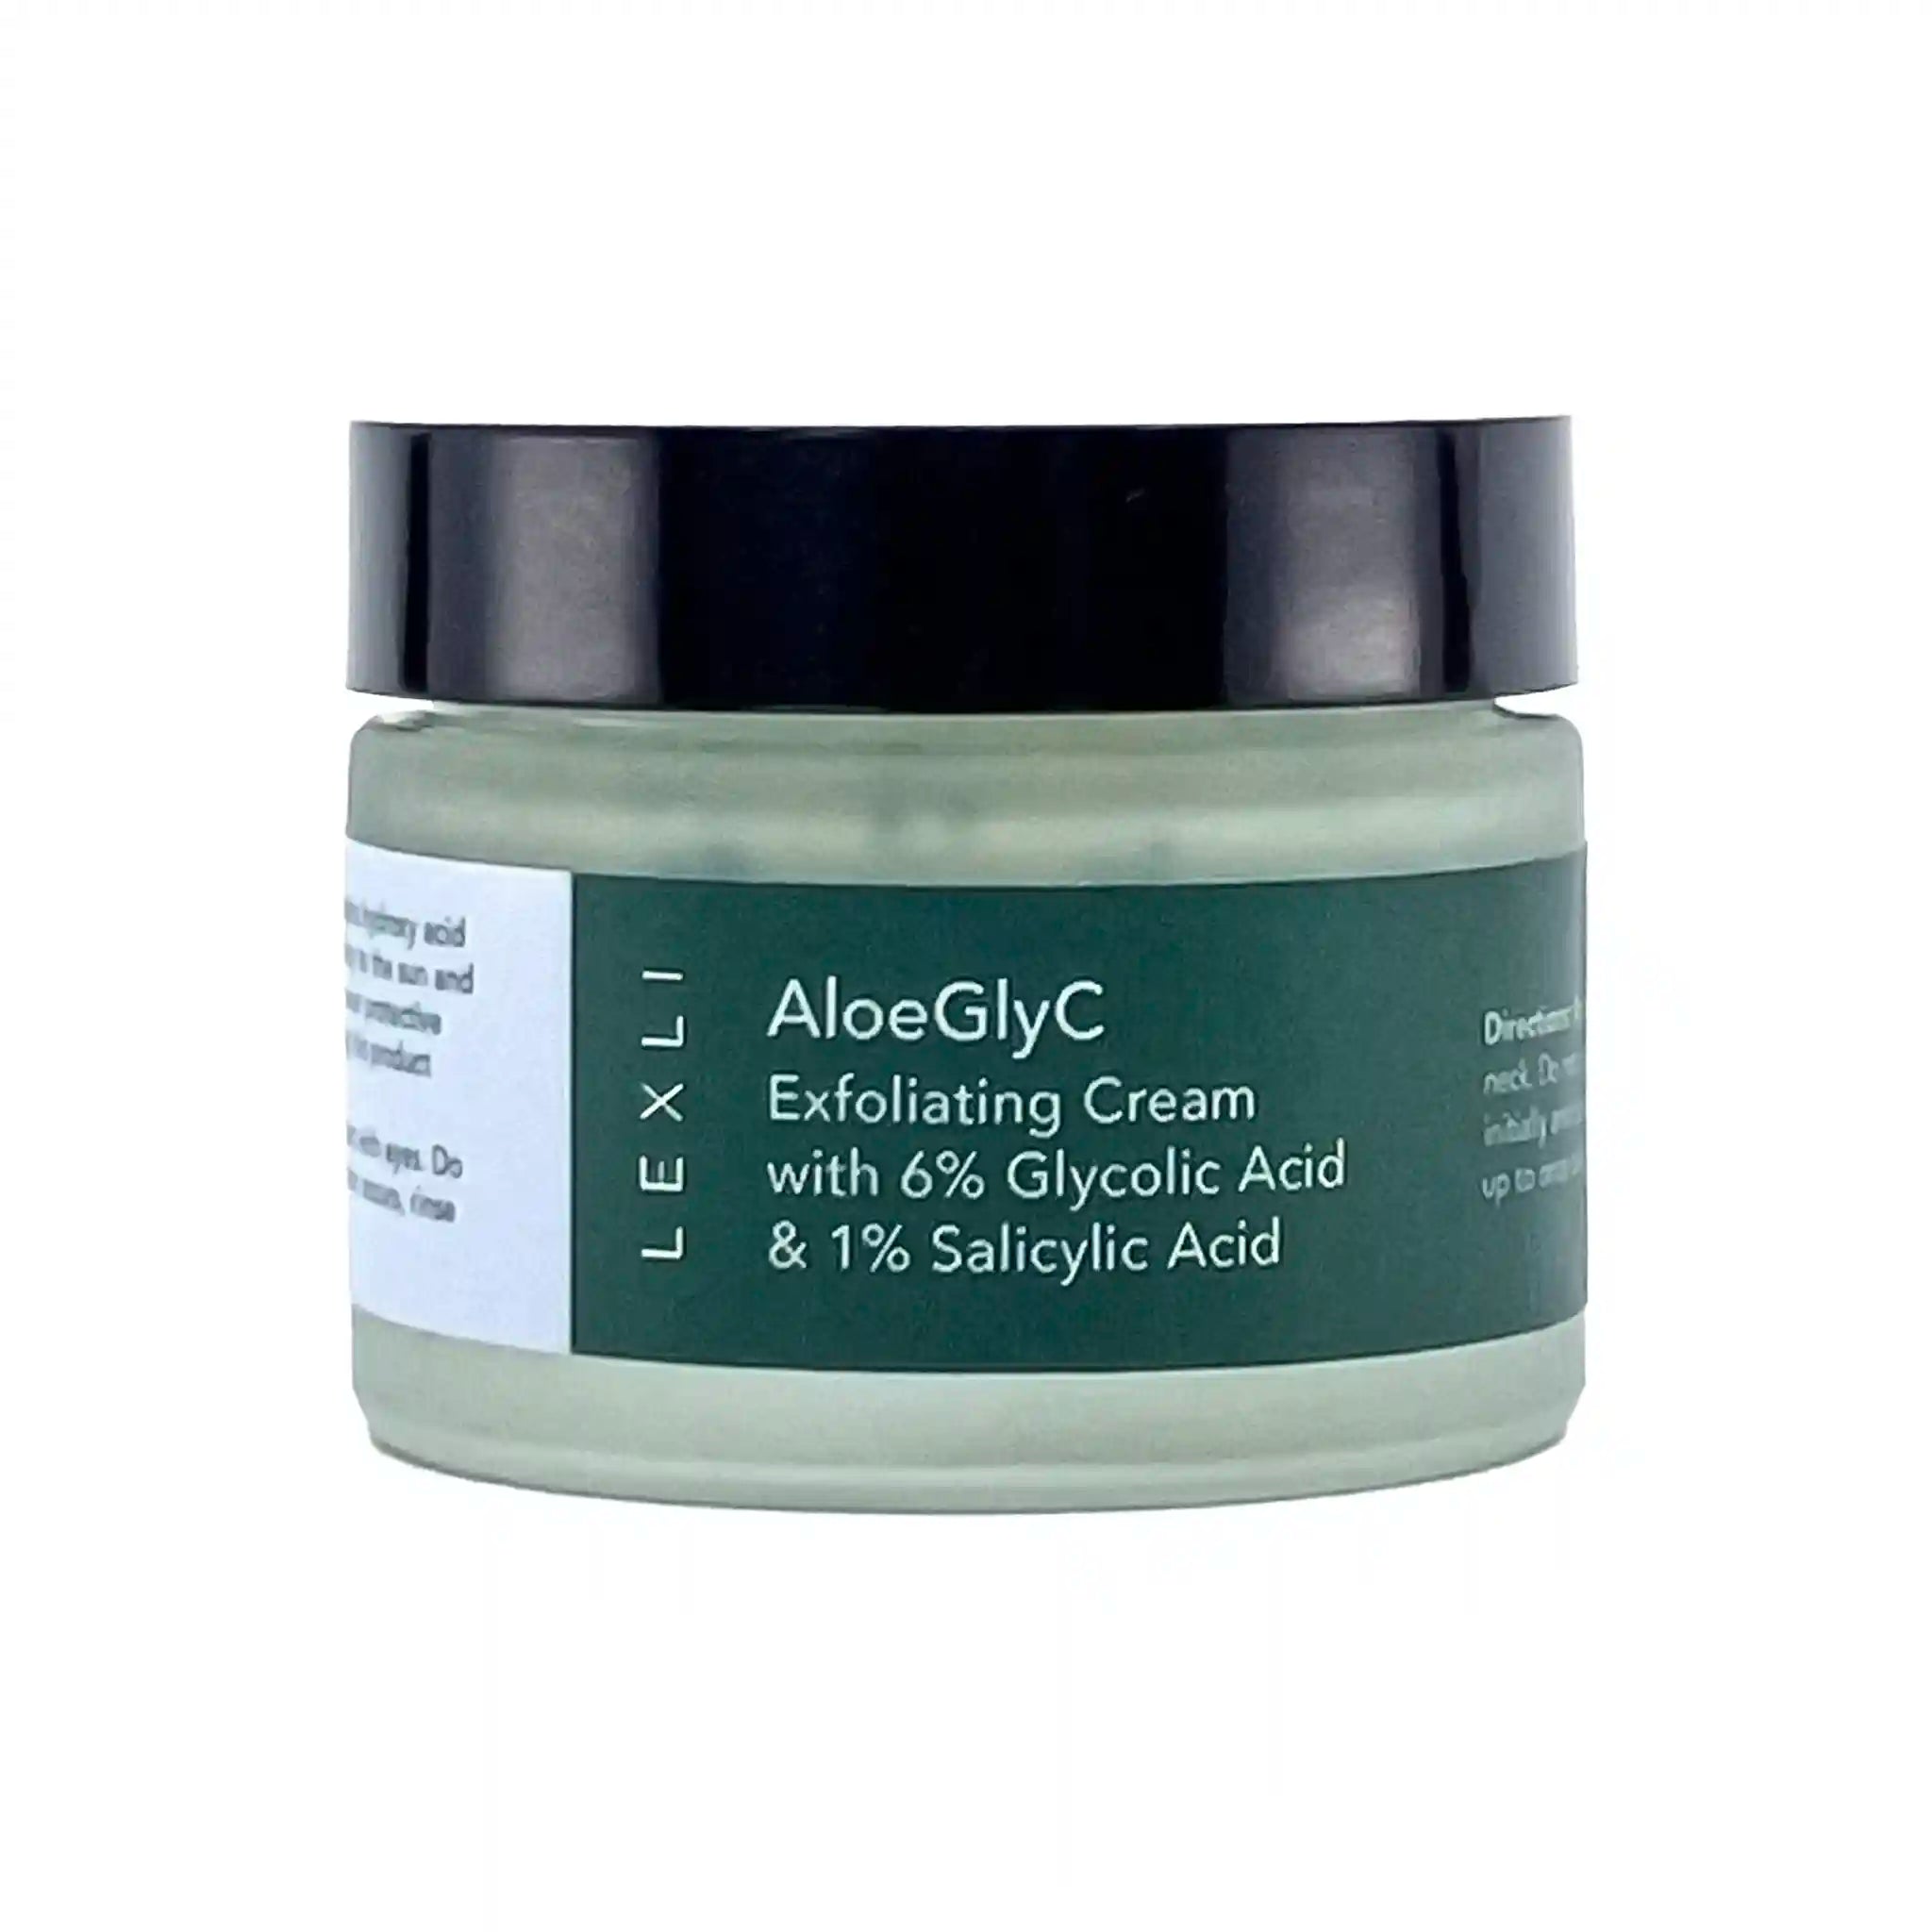 1 oz jar with green label, AloeGlyC